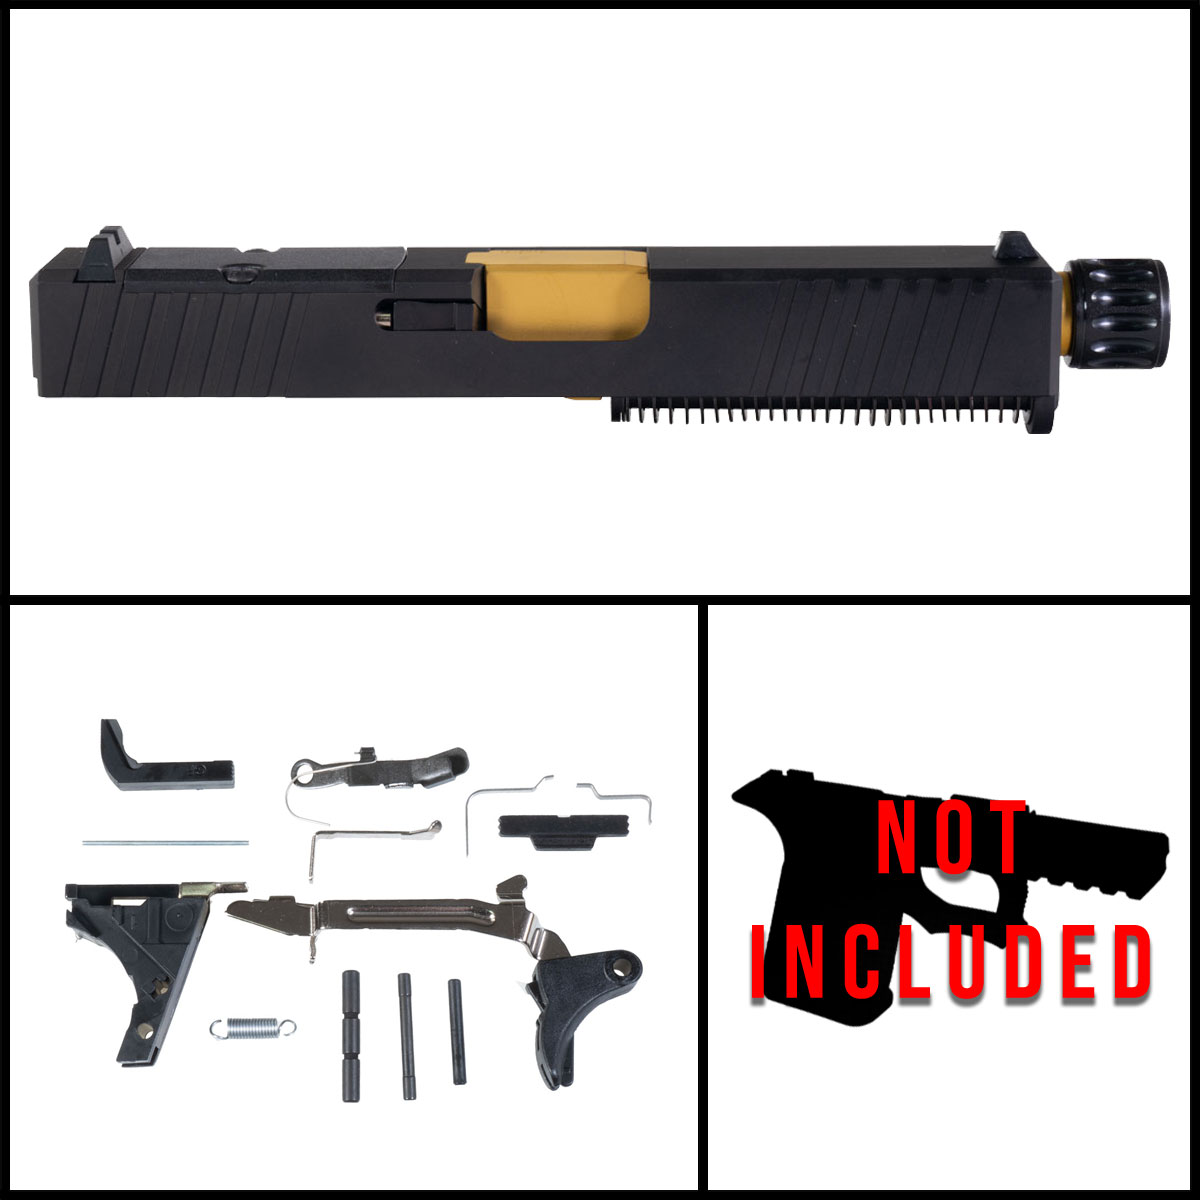 DDS 'Bloei' 9mm Full Pistol Build Kit (Everything Minus Frame) - Glock 19 Gen 1-3 Compatible